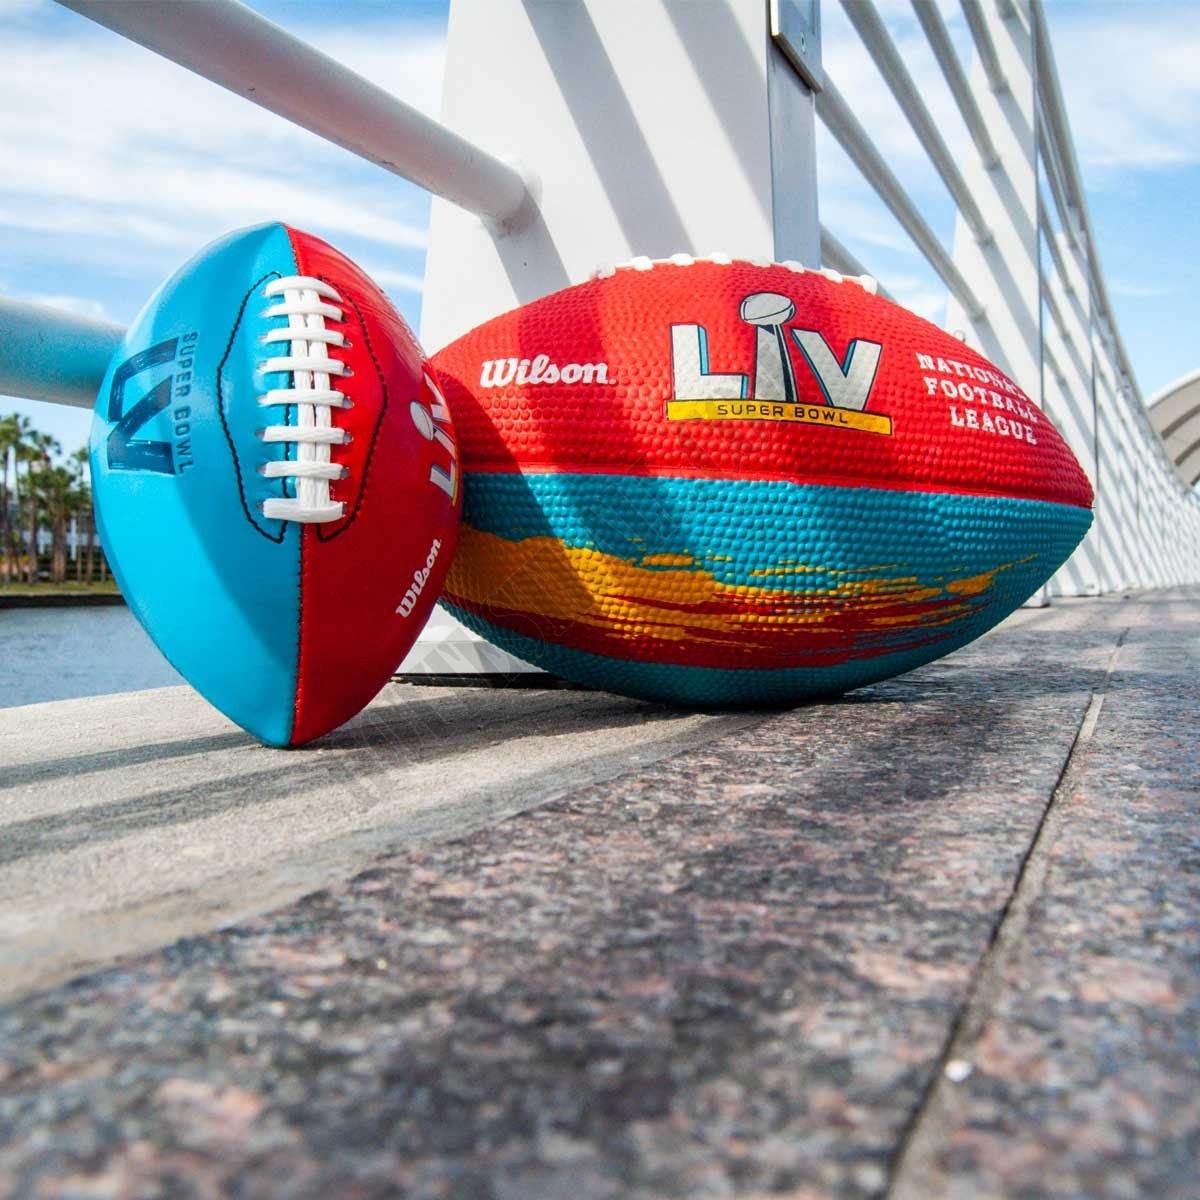 Super Bowl LV Micro Mini Football ● Wilson Promotions - -3